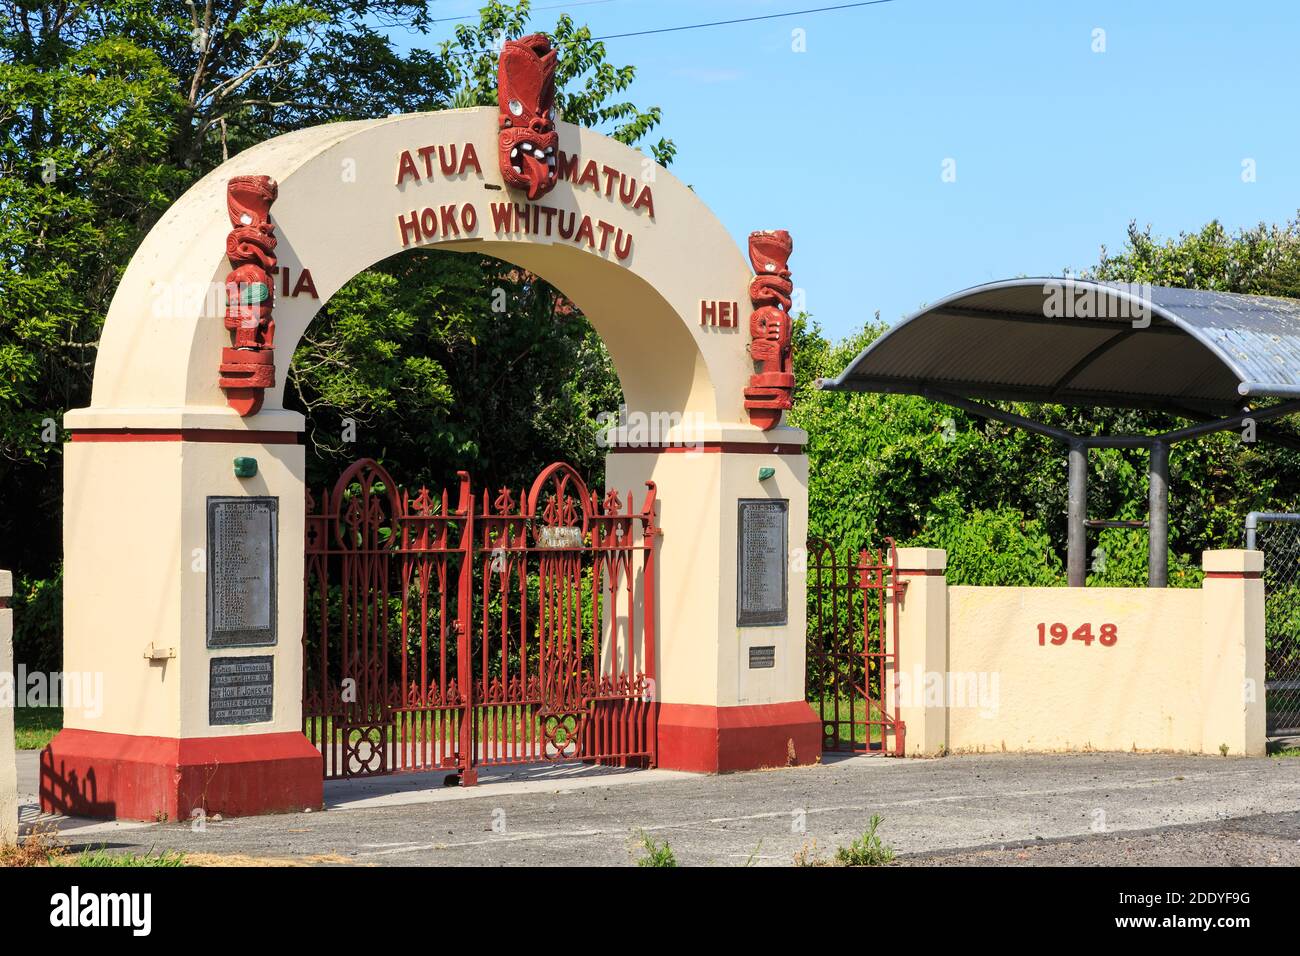 War memorial gates (erected 1948) with Maori artwork outside Te Matai School near Te Puke, New Zealand Stock Photo